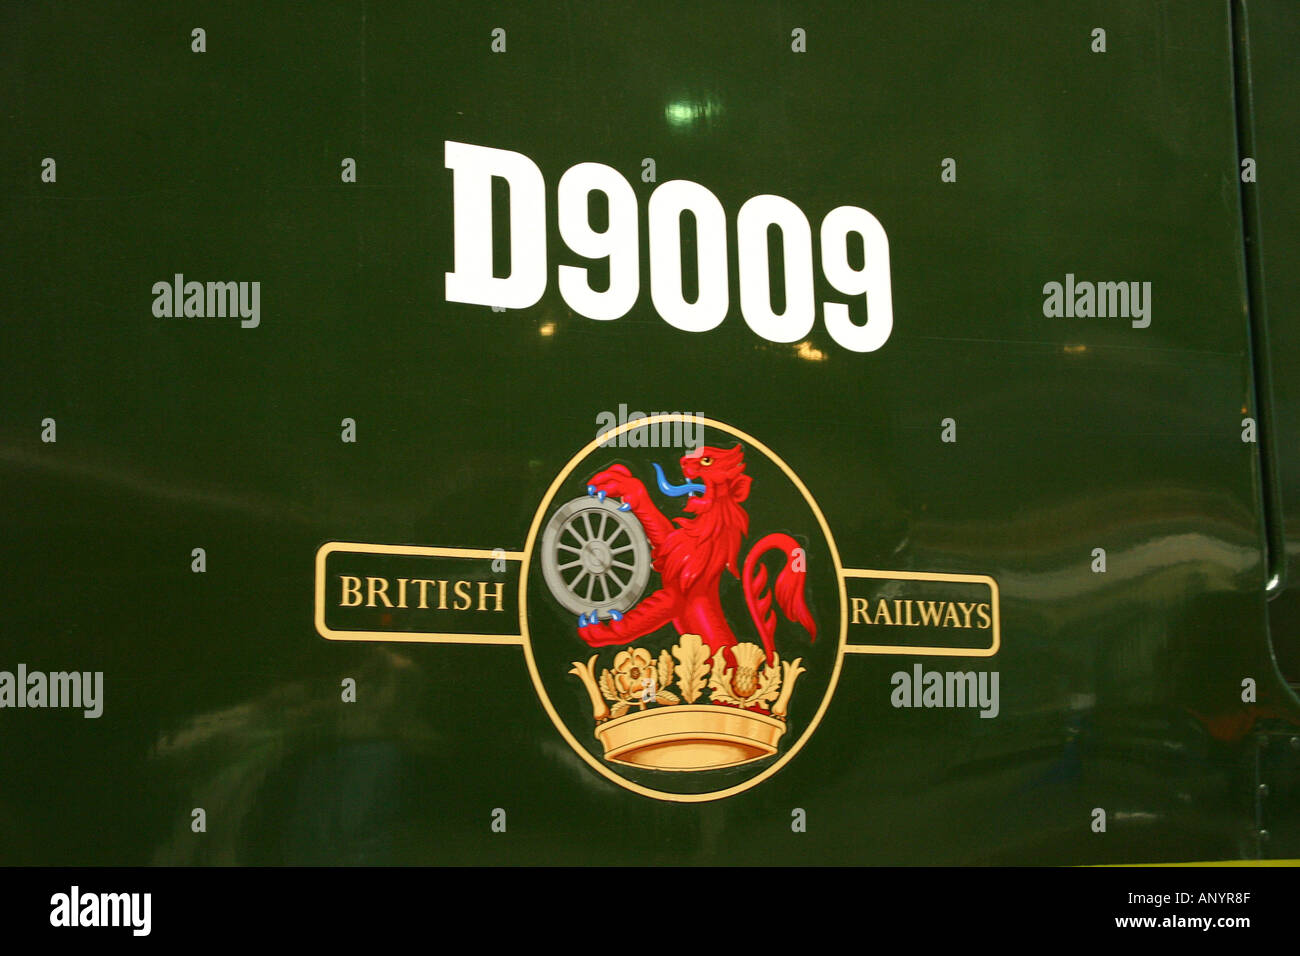 1950s British railways logo on side of diesel locomotive Stock Photo